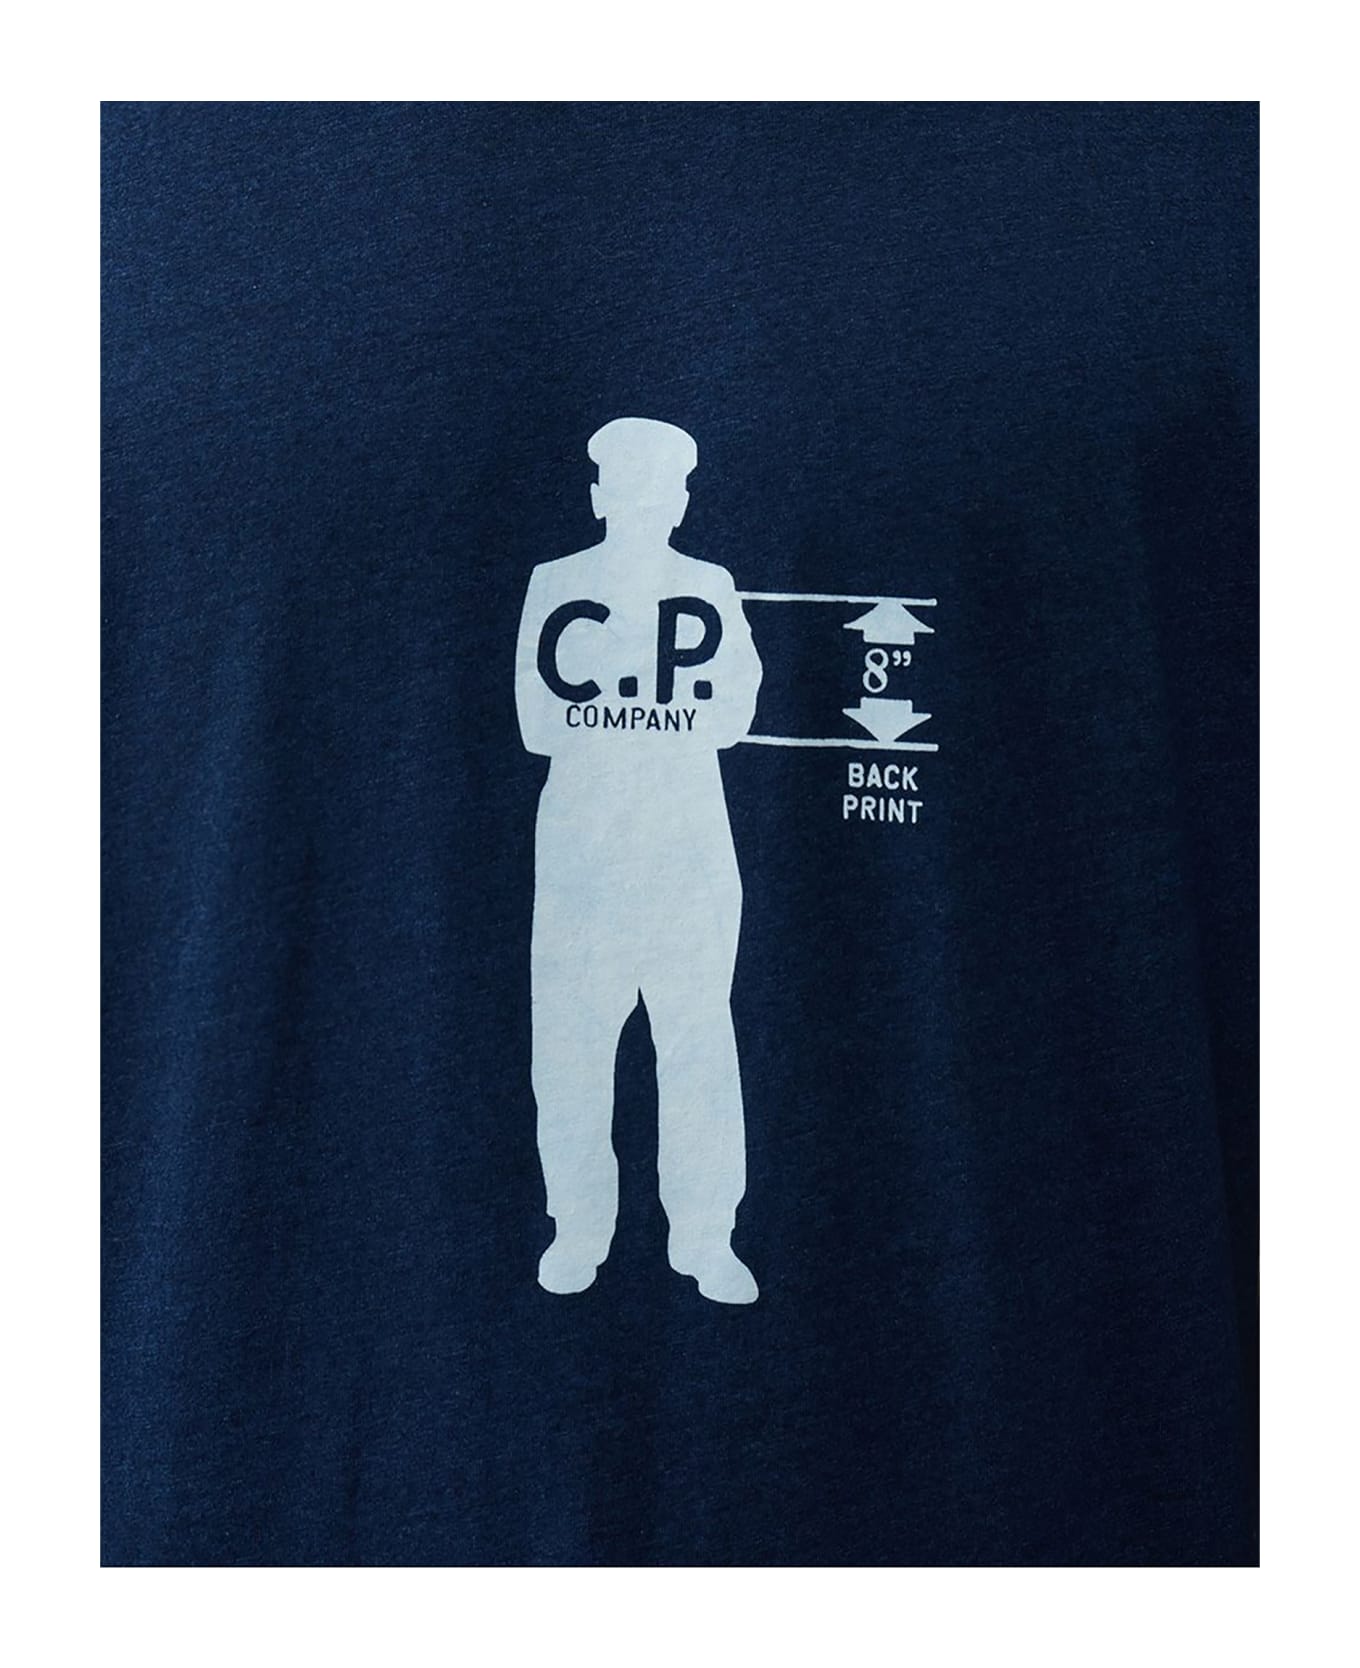 C.P. Company C.p.company T-shirts And Polos Blue - Blue シャツ